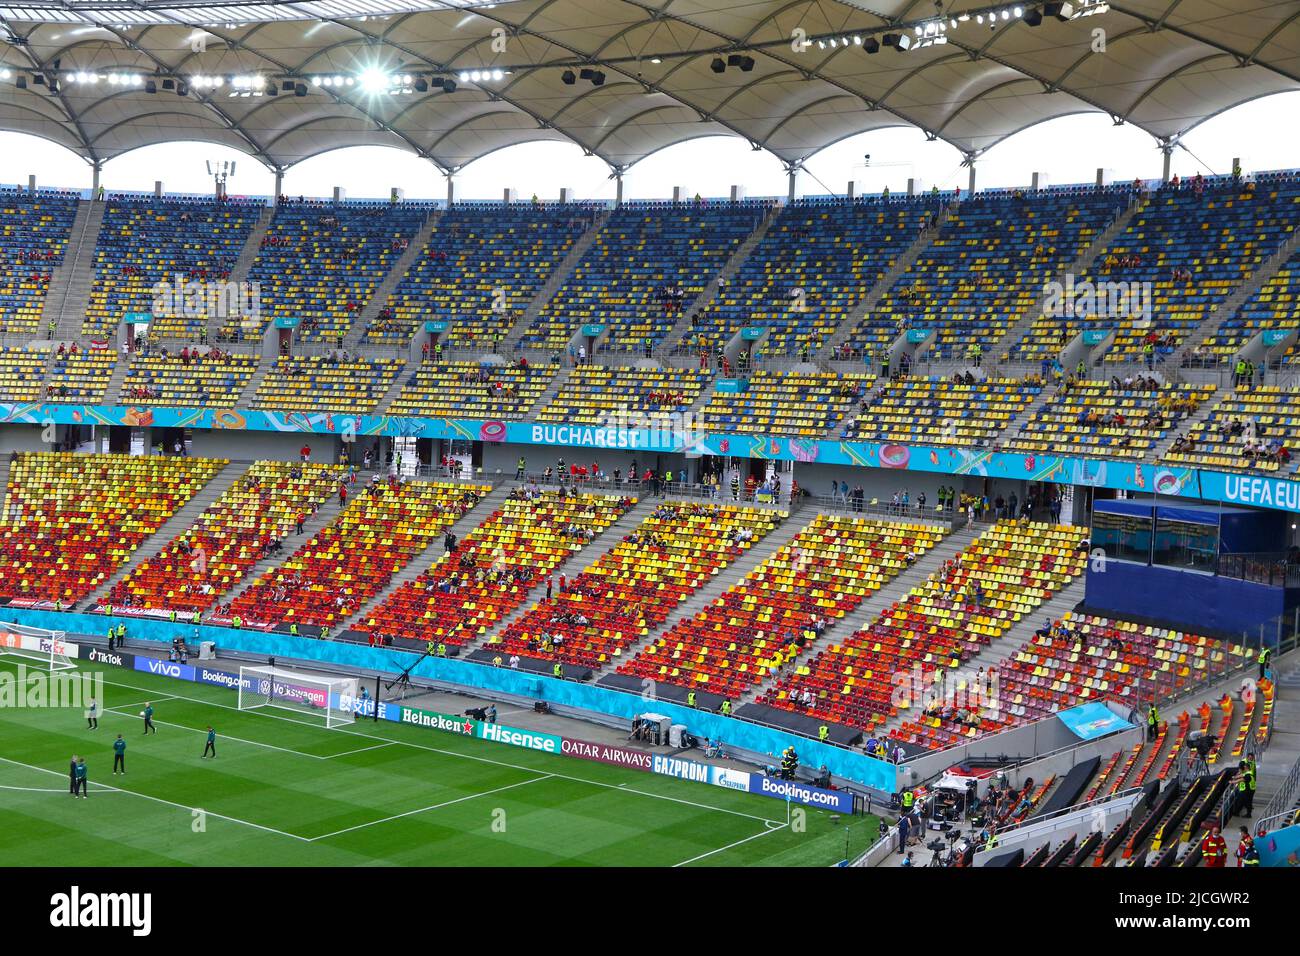 BUCHAREST, ROMANIA - JUNE 21, 2021: Panoramic view of tribunes of the National Arena Bucharest stadium seen during the UEFA EURO 2020 game Ukraine v Austria Stock Photo